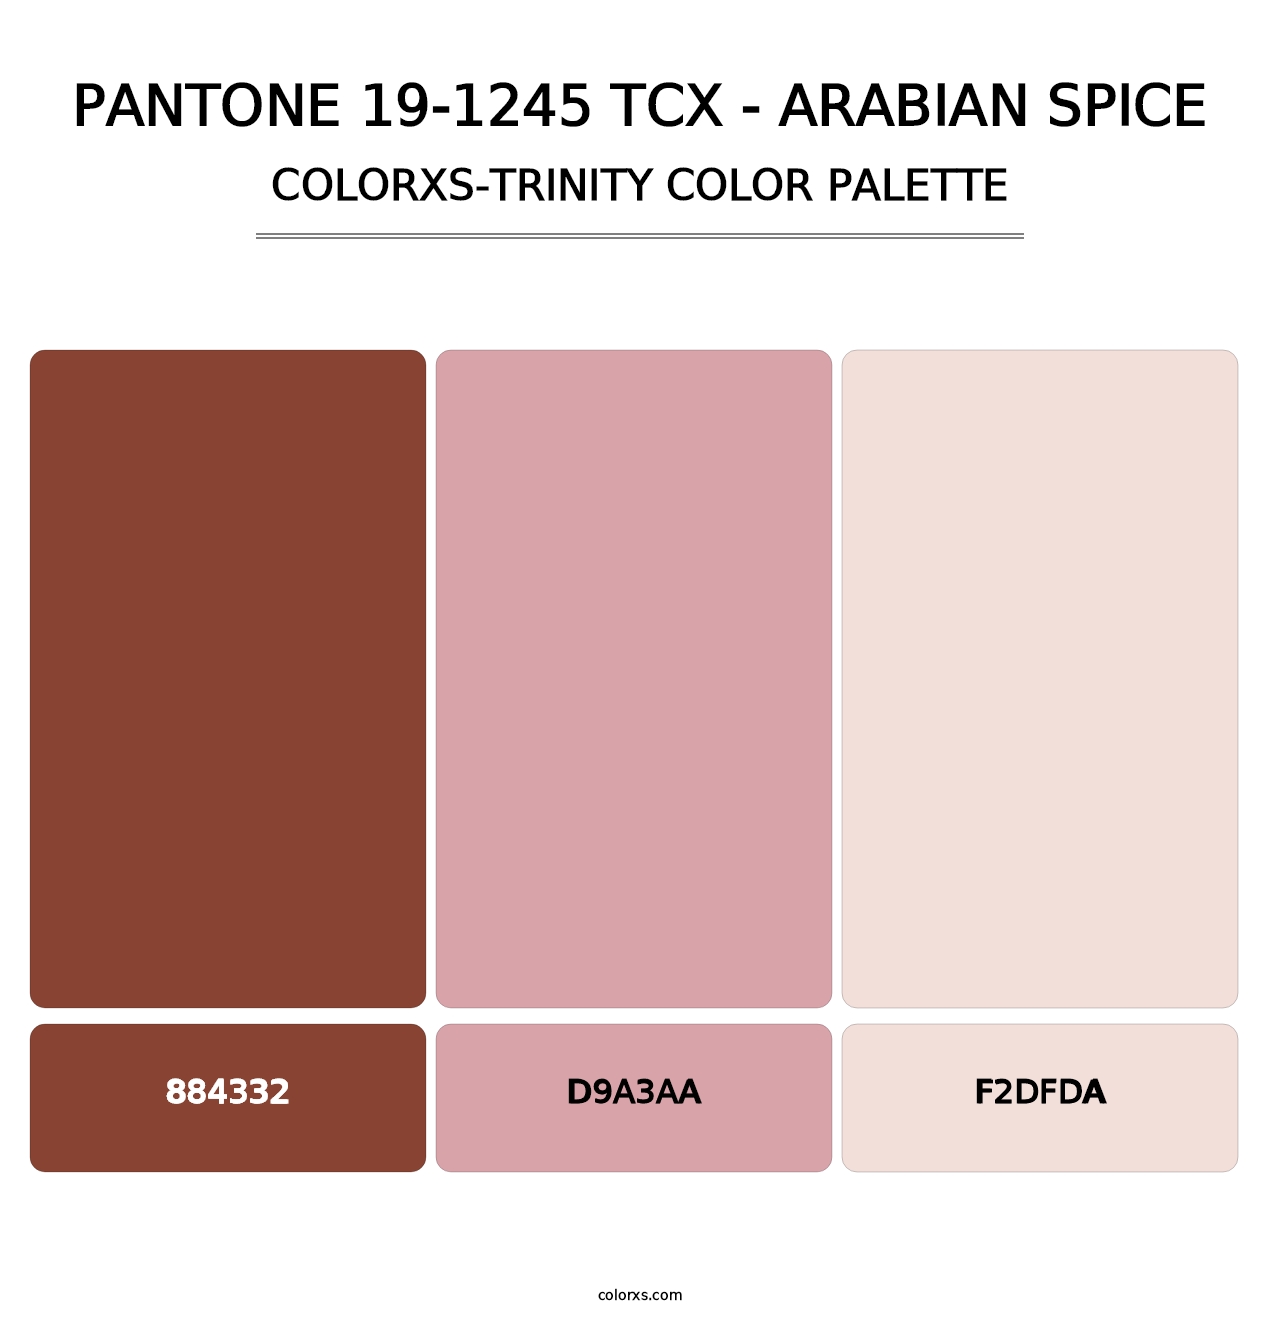 PANTONE 19-1245 TCX - Arabian Spice - Colorxs Trinity Palette